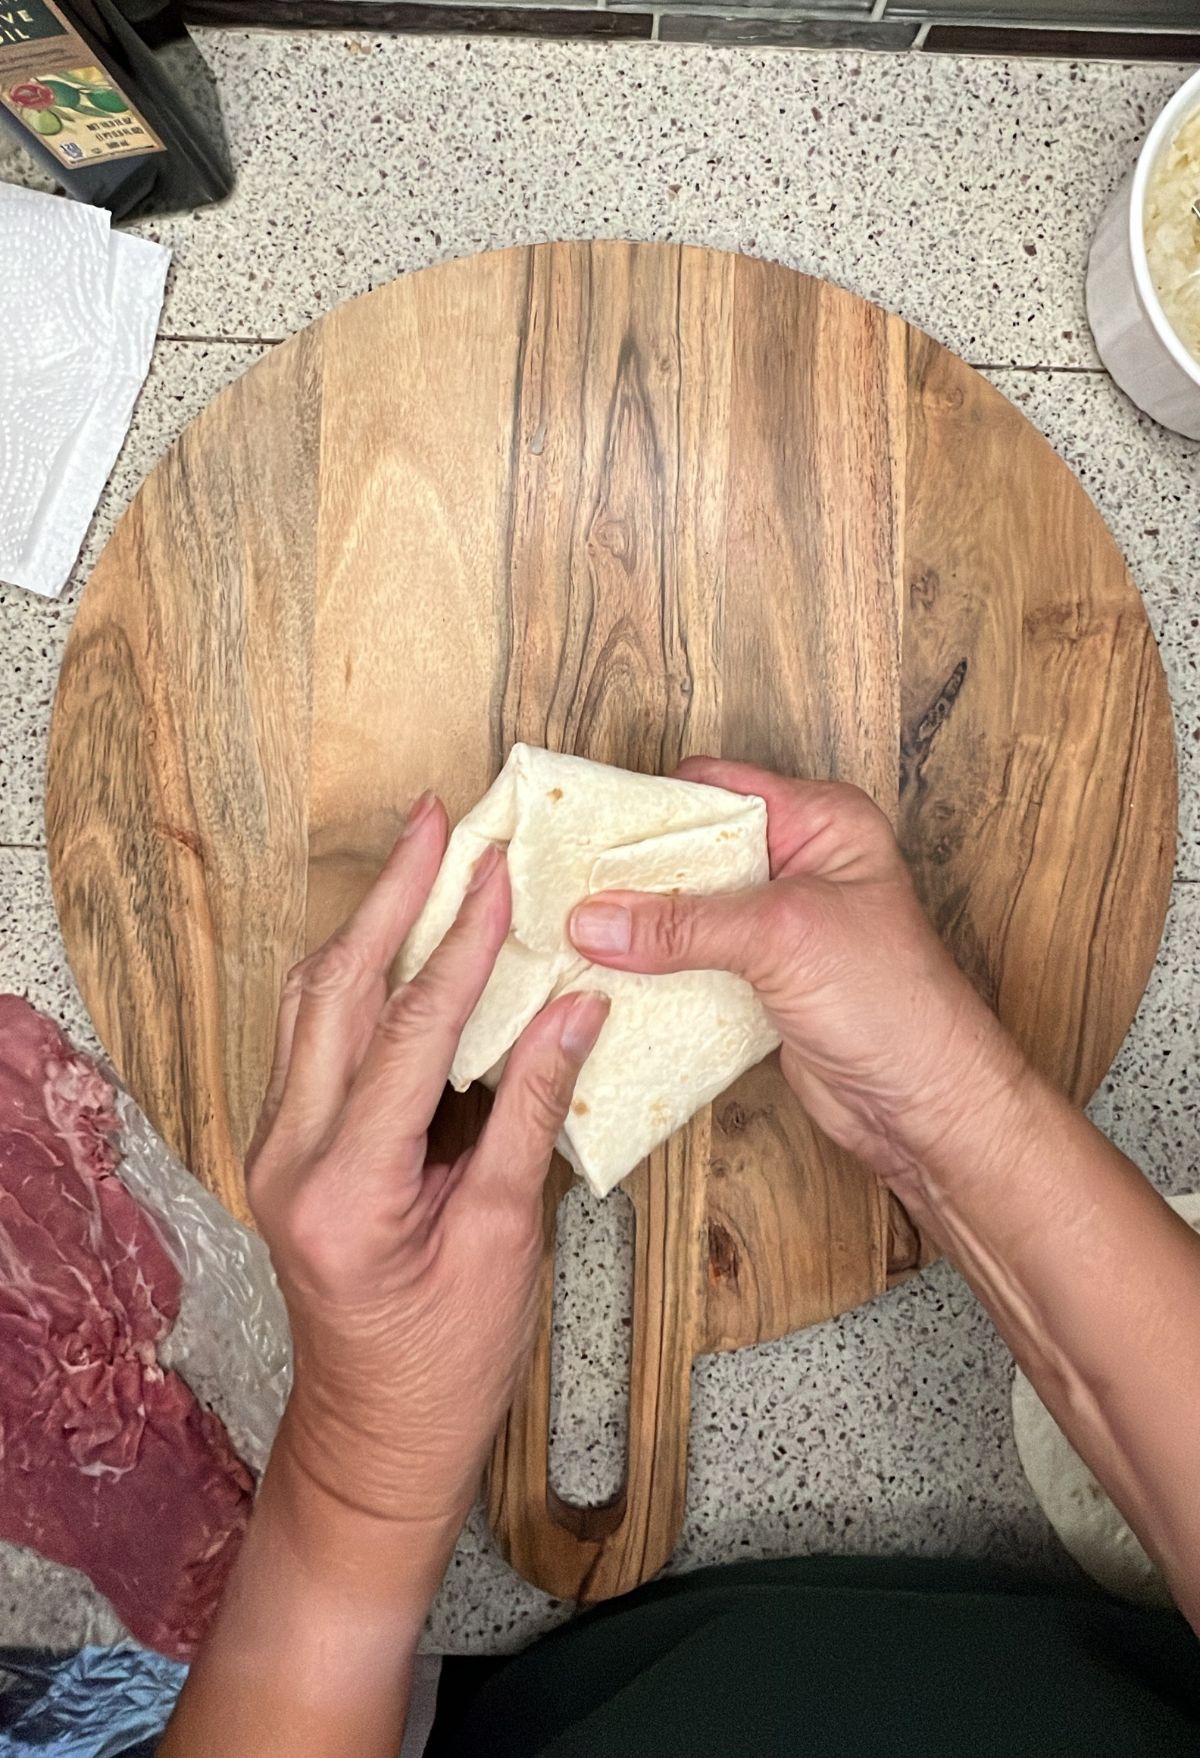 Person folding a tortilla on a wooden cutting board.